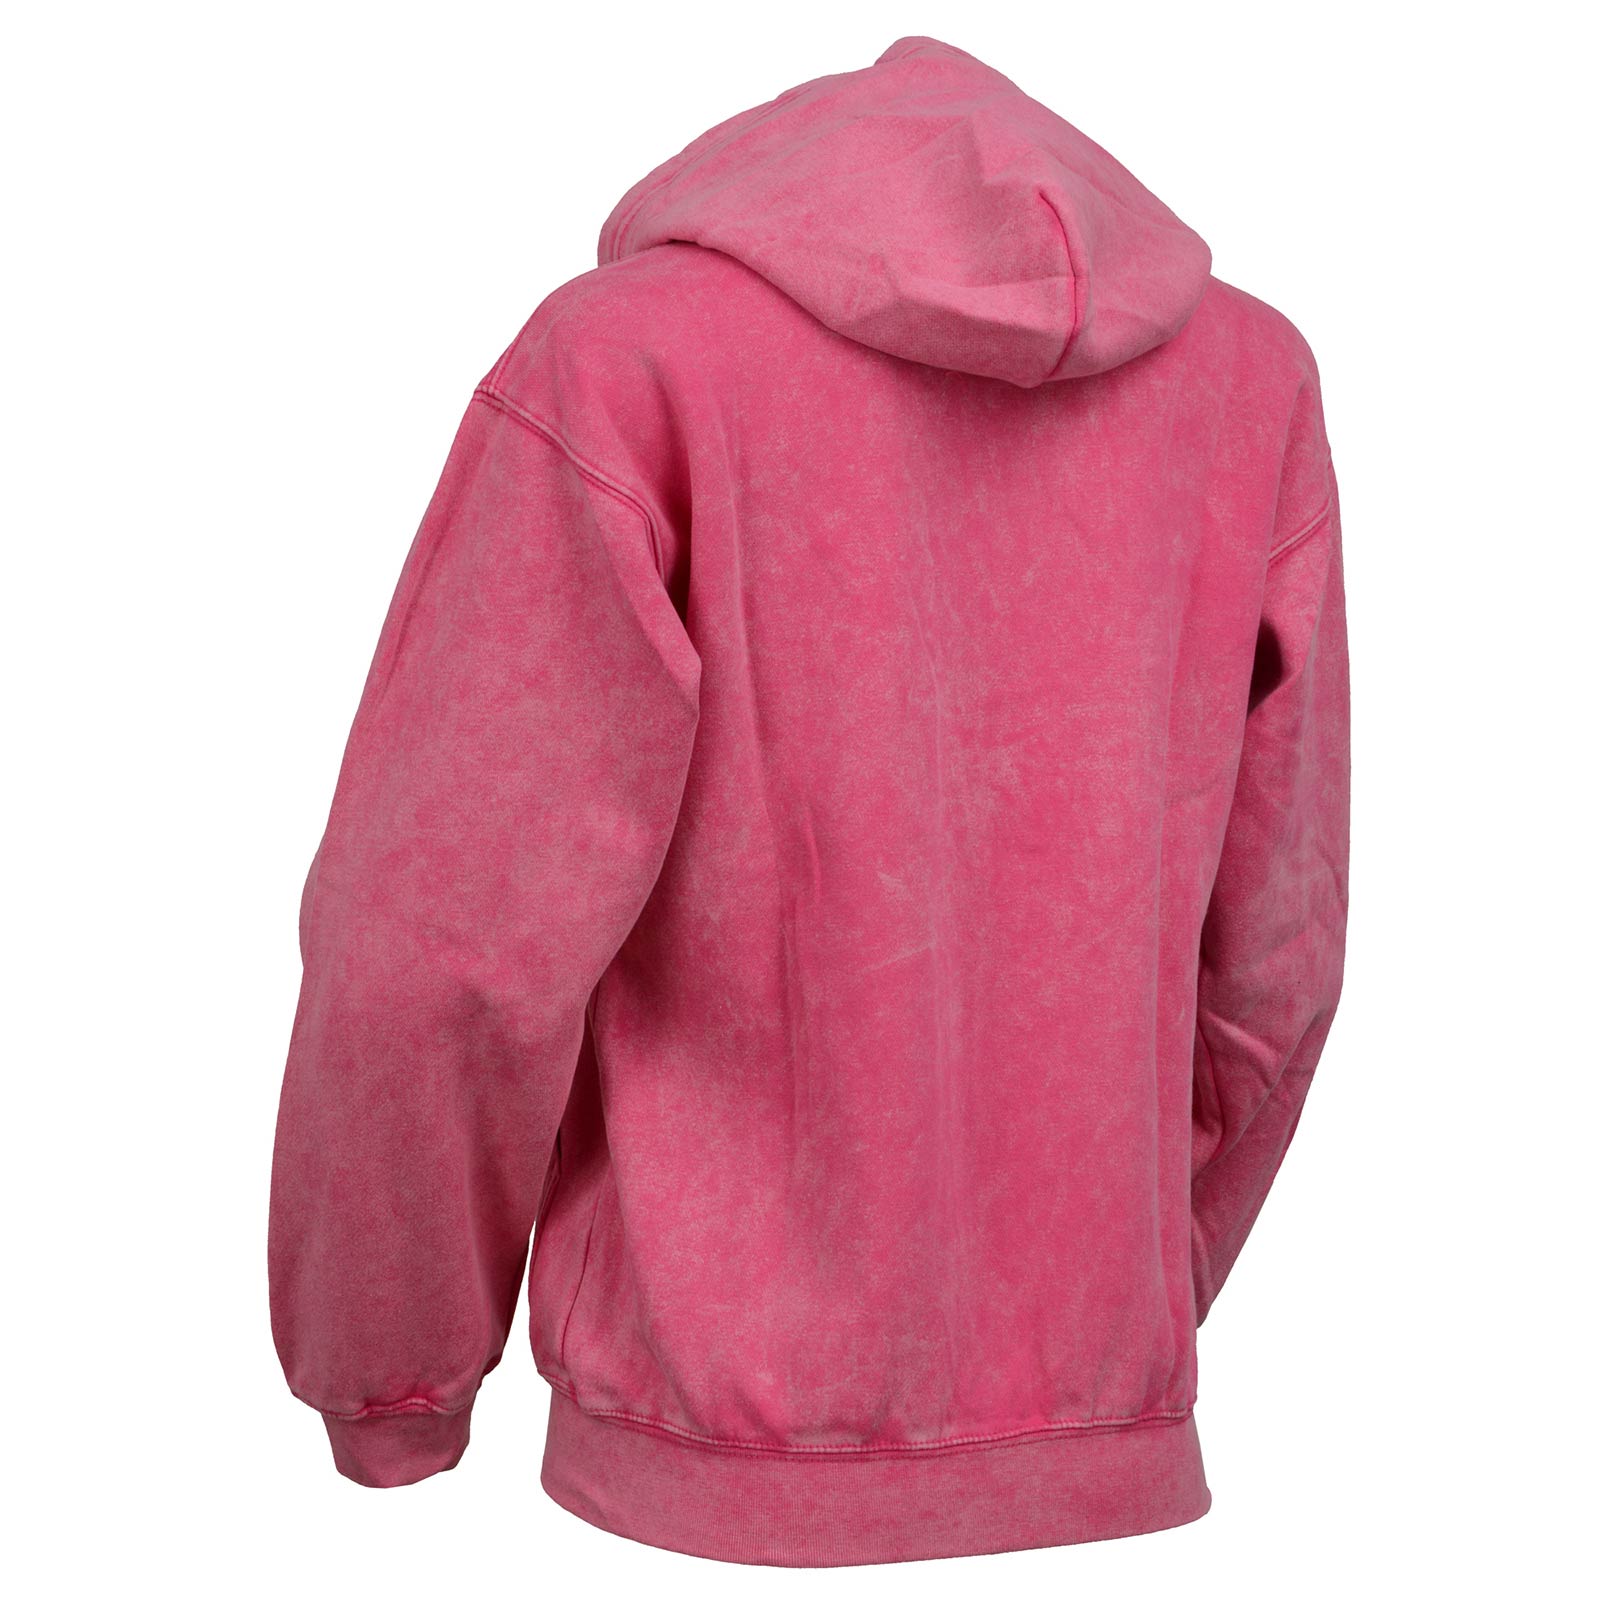 Milwaukee Leather MNG21620 Women's Distressed Pink Sweatshirt Full Zip Up Long Sleeve Casual Hoodie - with Pocket